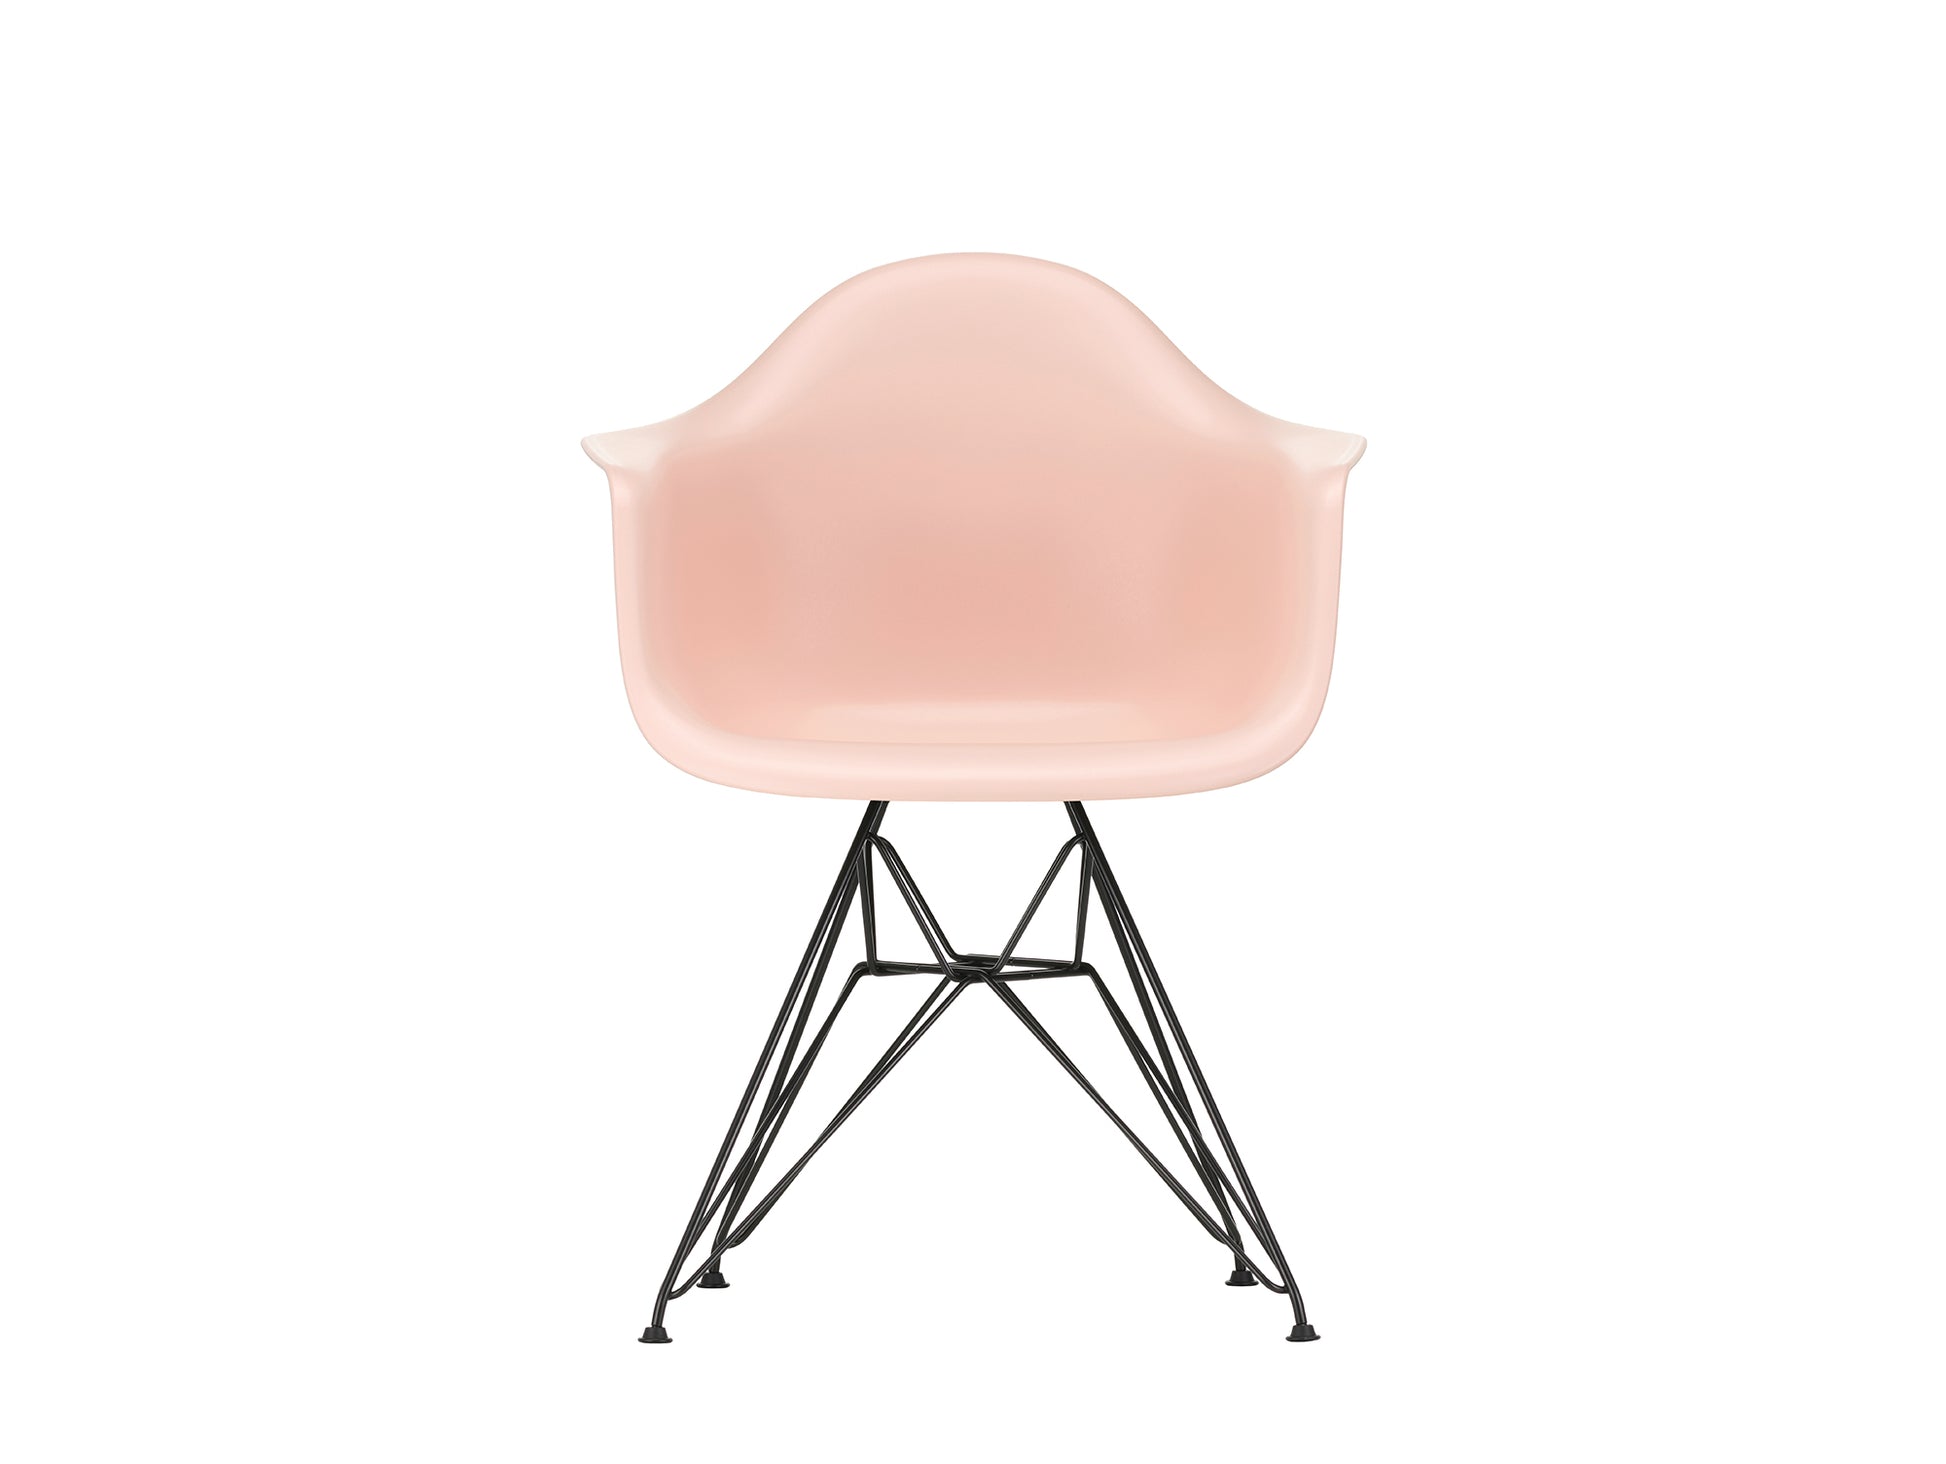 Eames DAR Plastic Armchair RE by Vitra - 41 Pale Rose Shell / Basic Dark Base